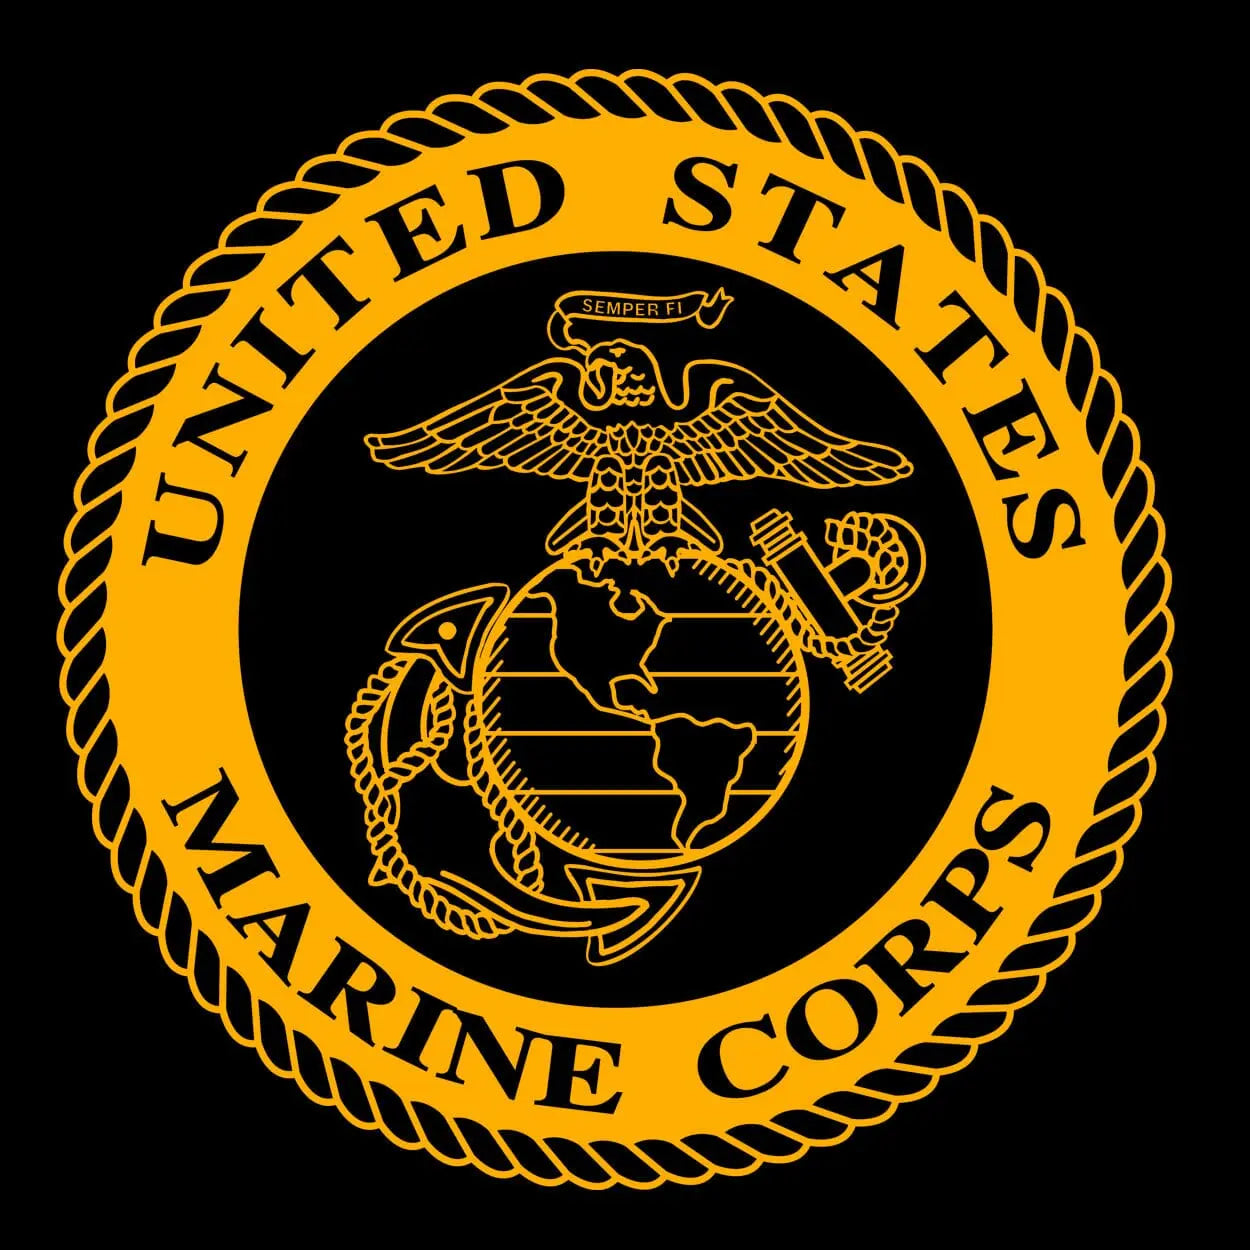 Marines Large Gold Seal 2-Sided Sweatshirt